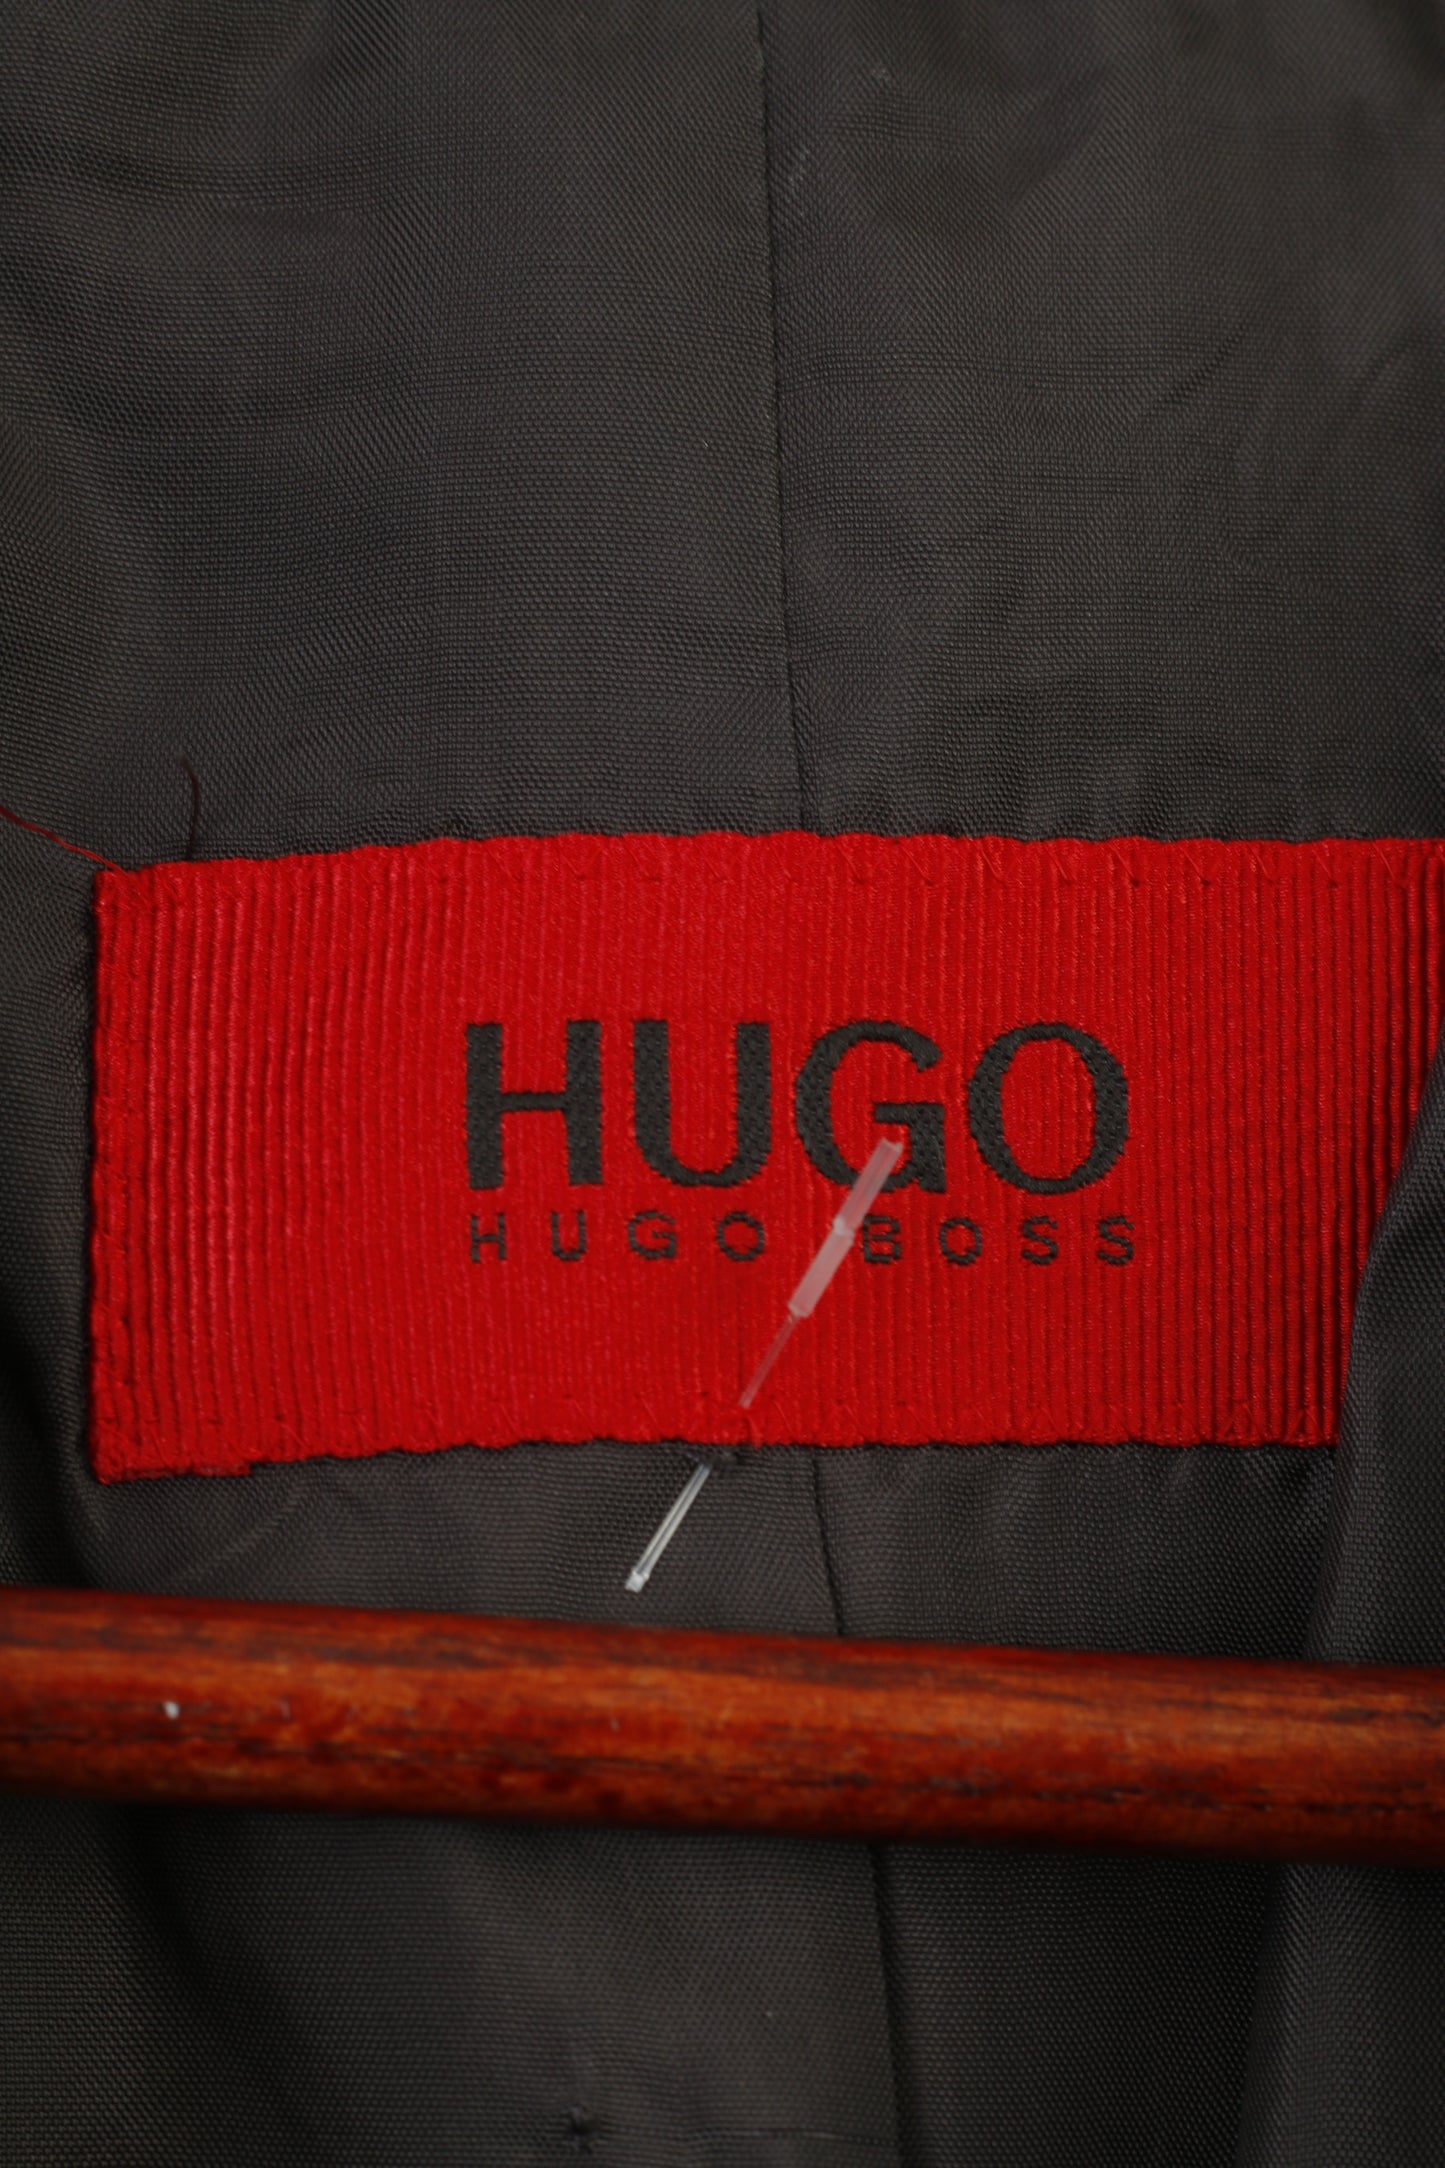 Hugo Boss Men 52 42 Blazer Grey Wool Vintage Single Breasted Shoulder Pads Jacket